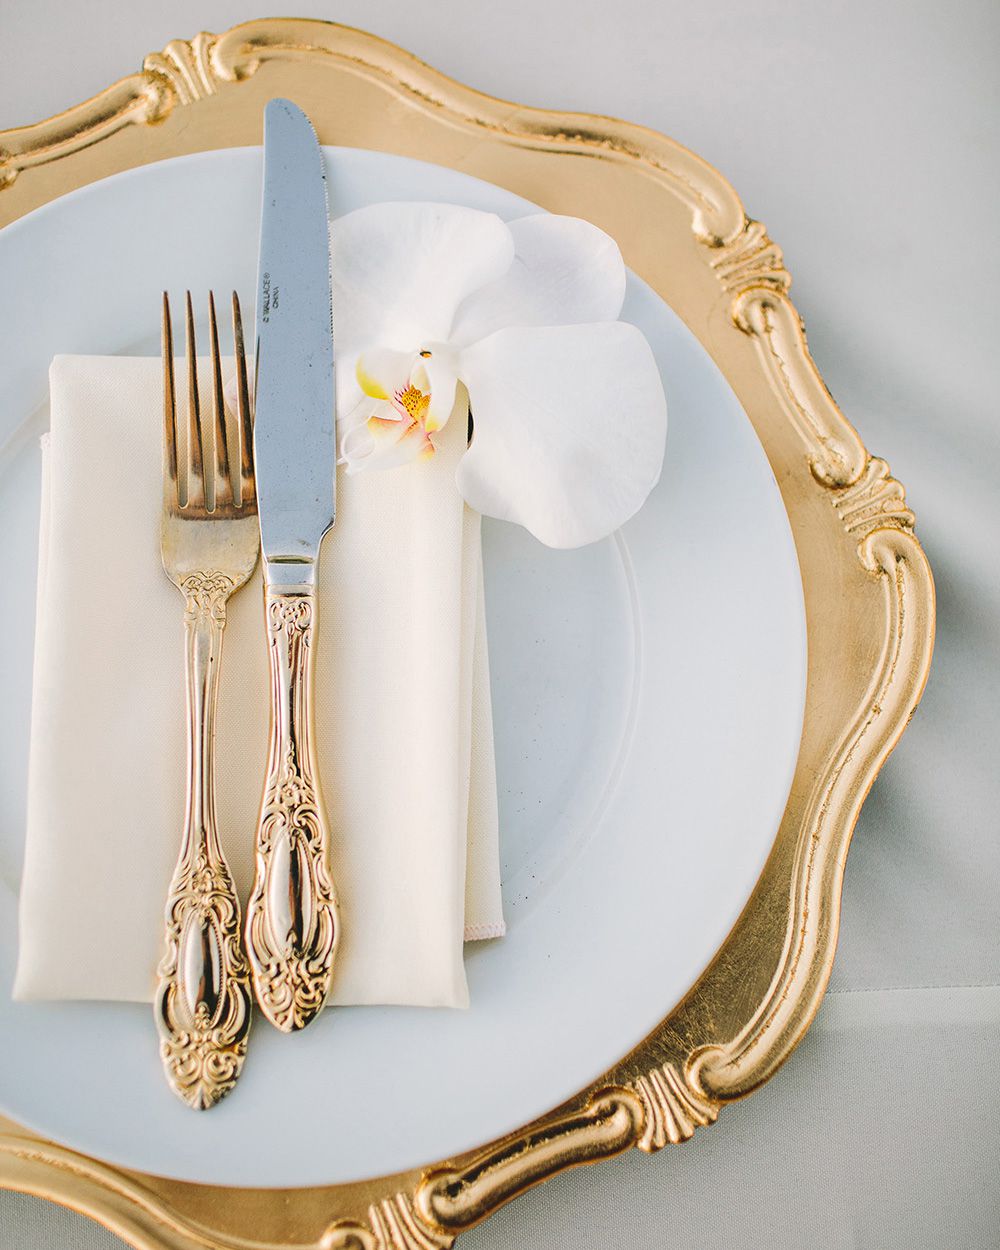 glamorous wedding ideas gold and white table setting